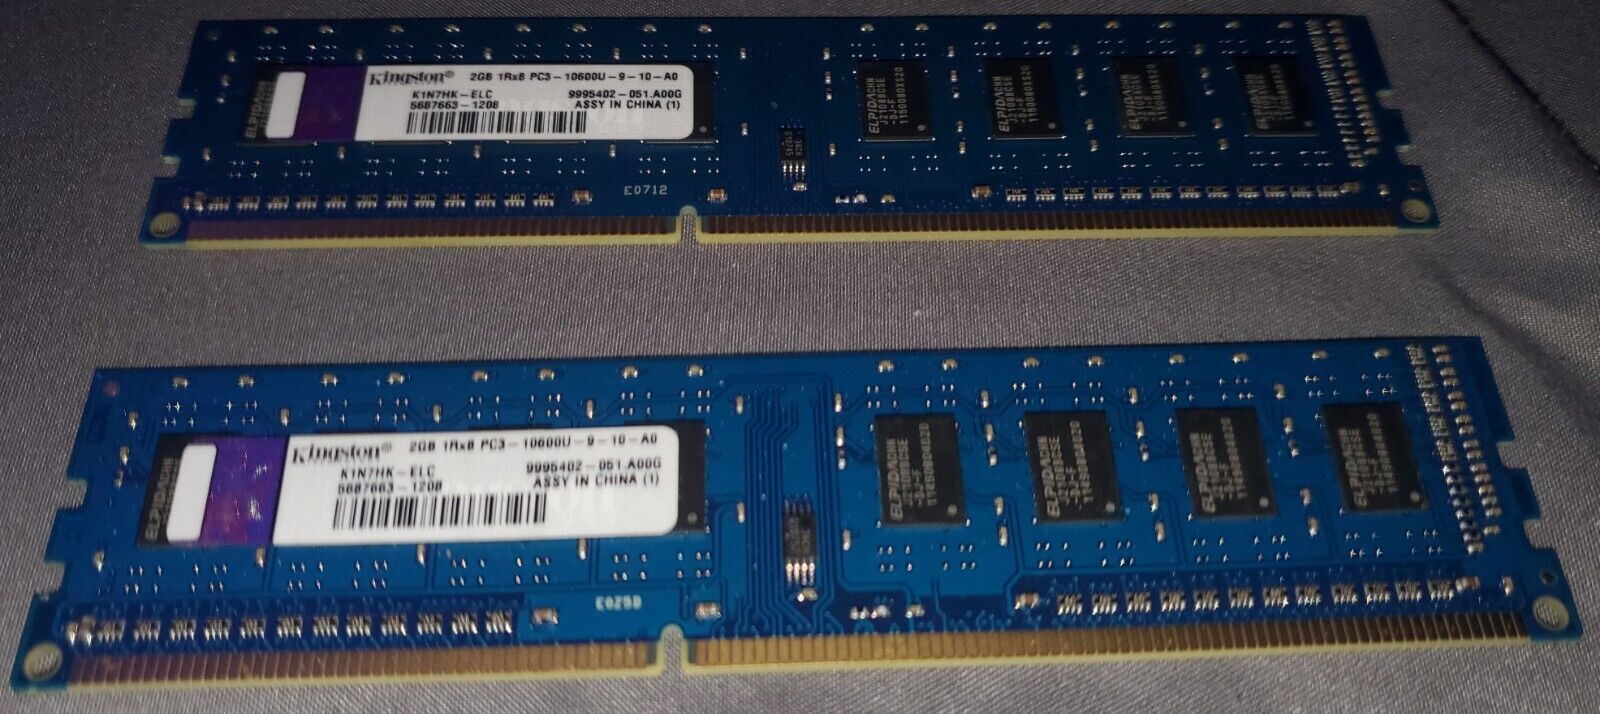 Kingston 2GB DDR3 RAM 1Rx8 PC3-10600U-9-10-AO (K1N7HK-ELC)